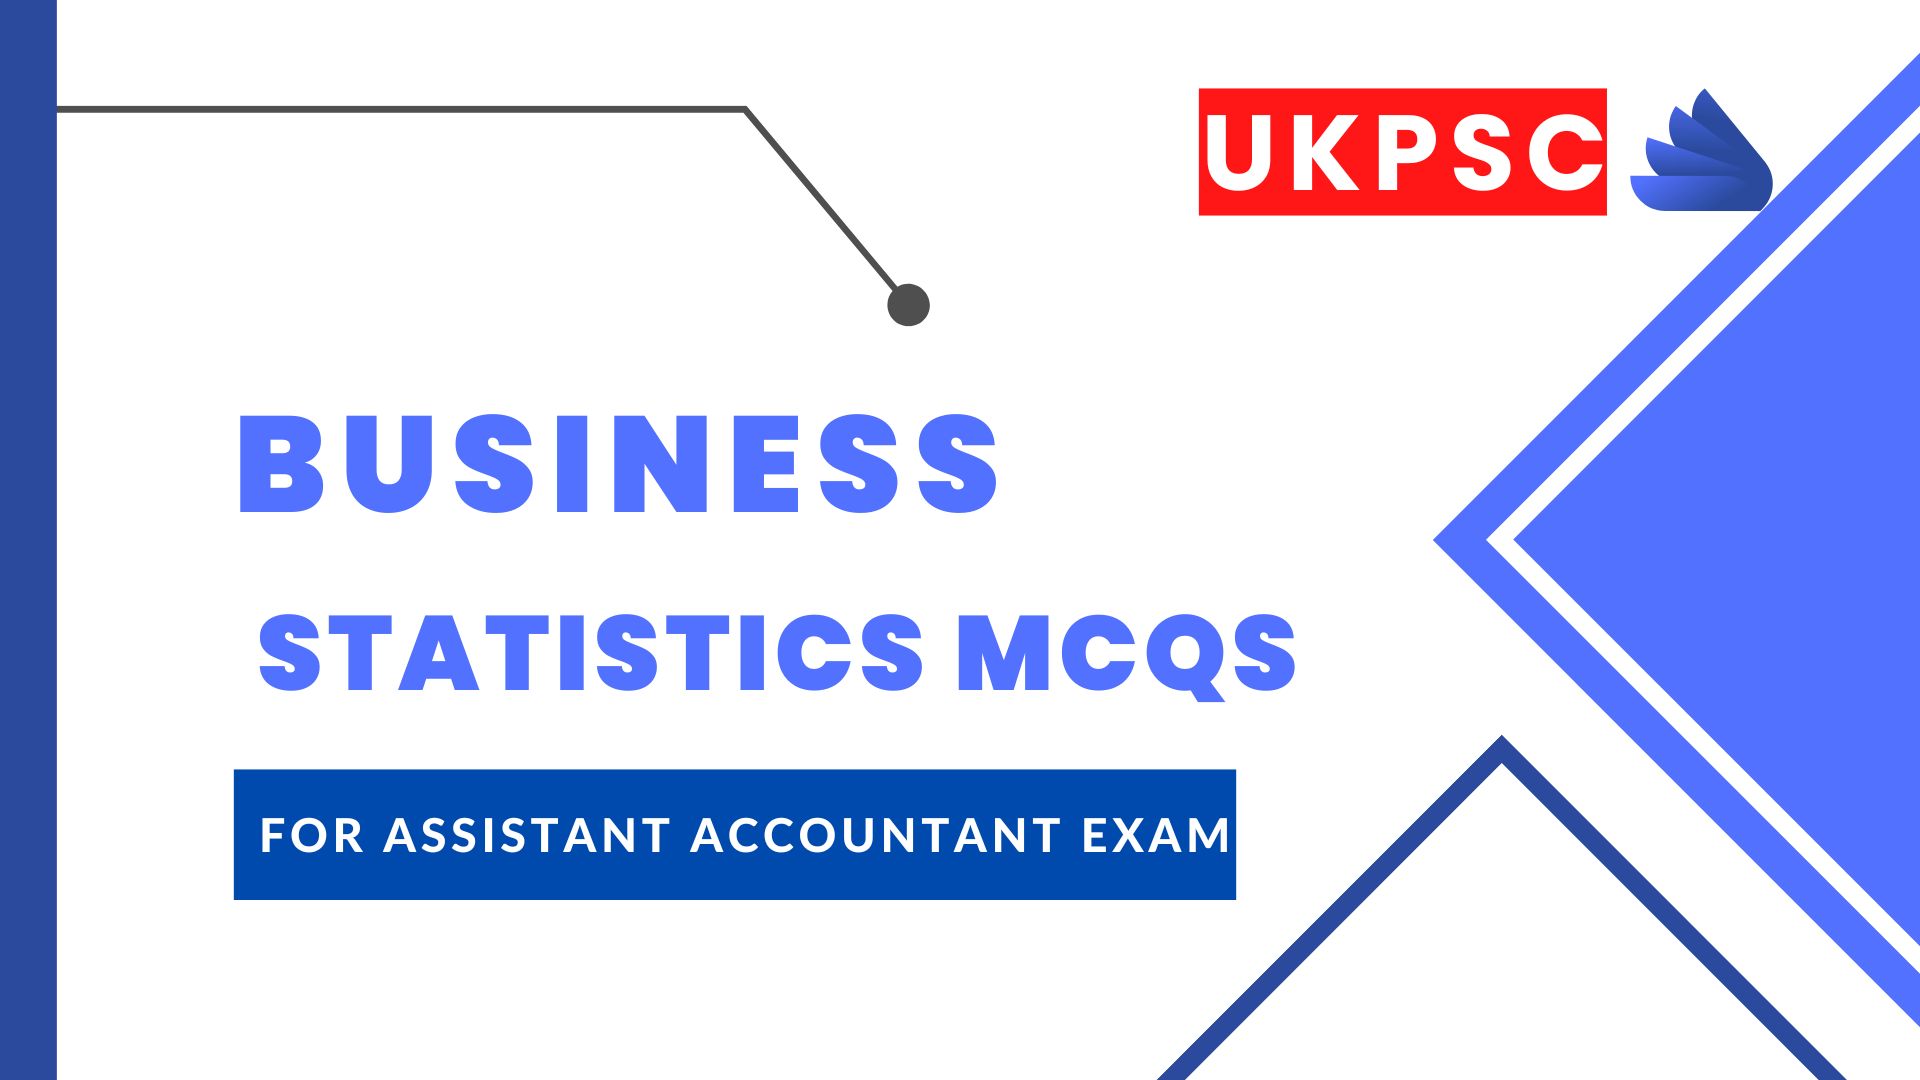 BUSINESS STATISTICS MCQS